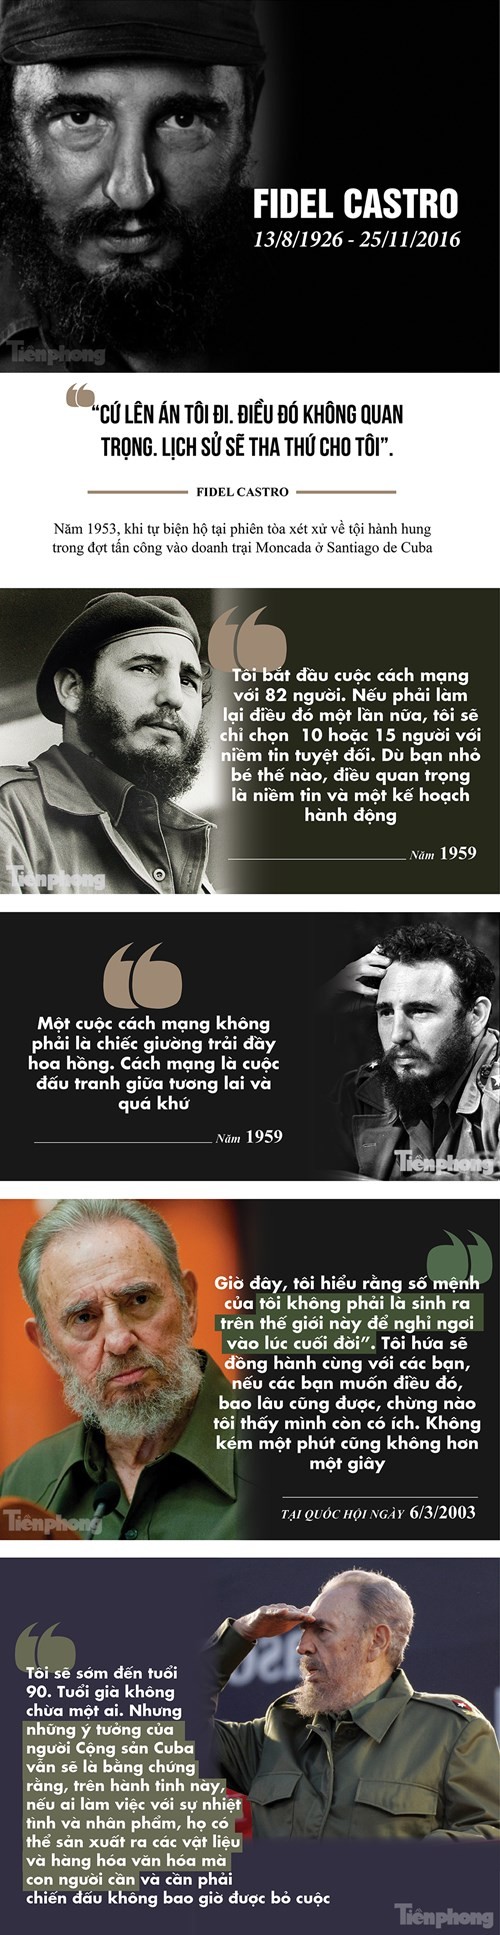 Nhung cau noi muon doi bat hu cua lanh tu Fidel Castro